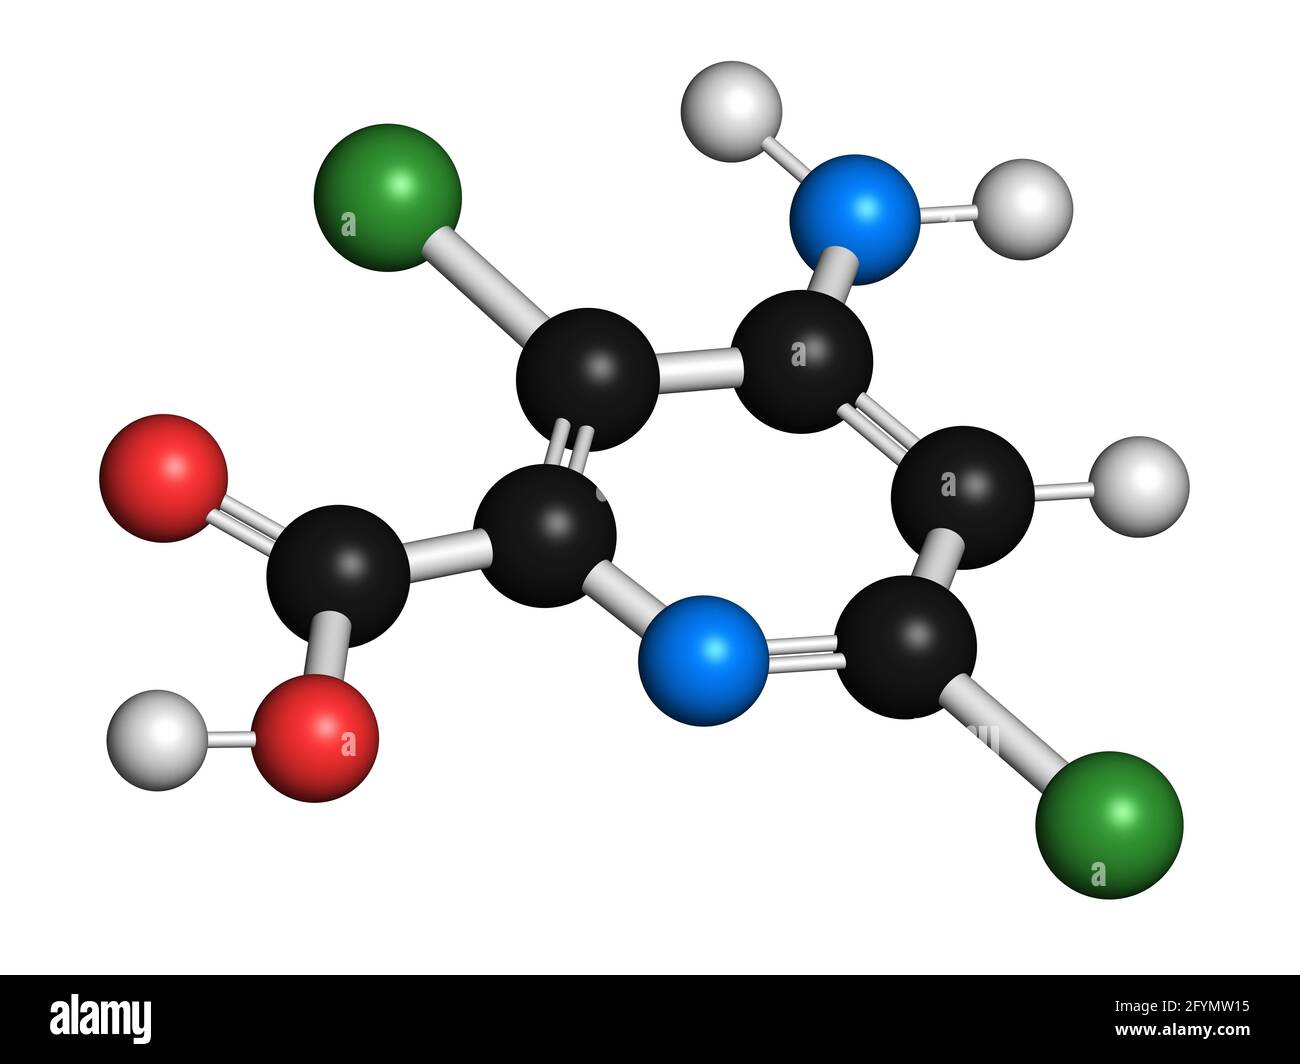 Aminopyralid herbicide molecule, illustration Stock Photo